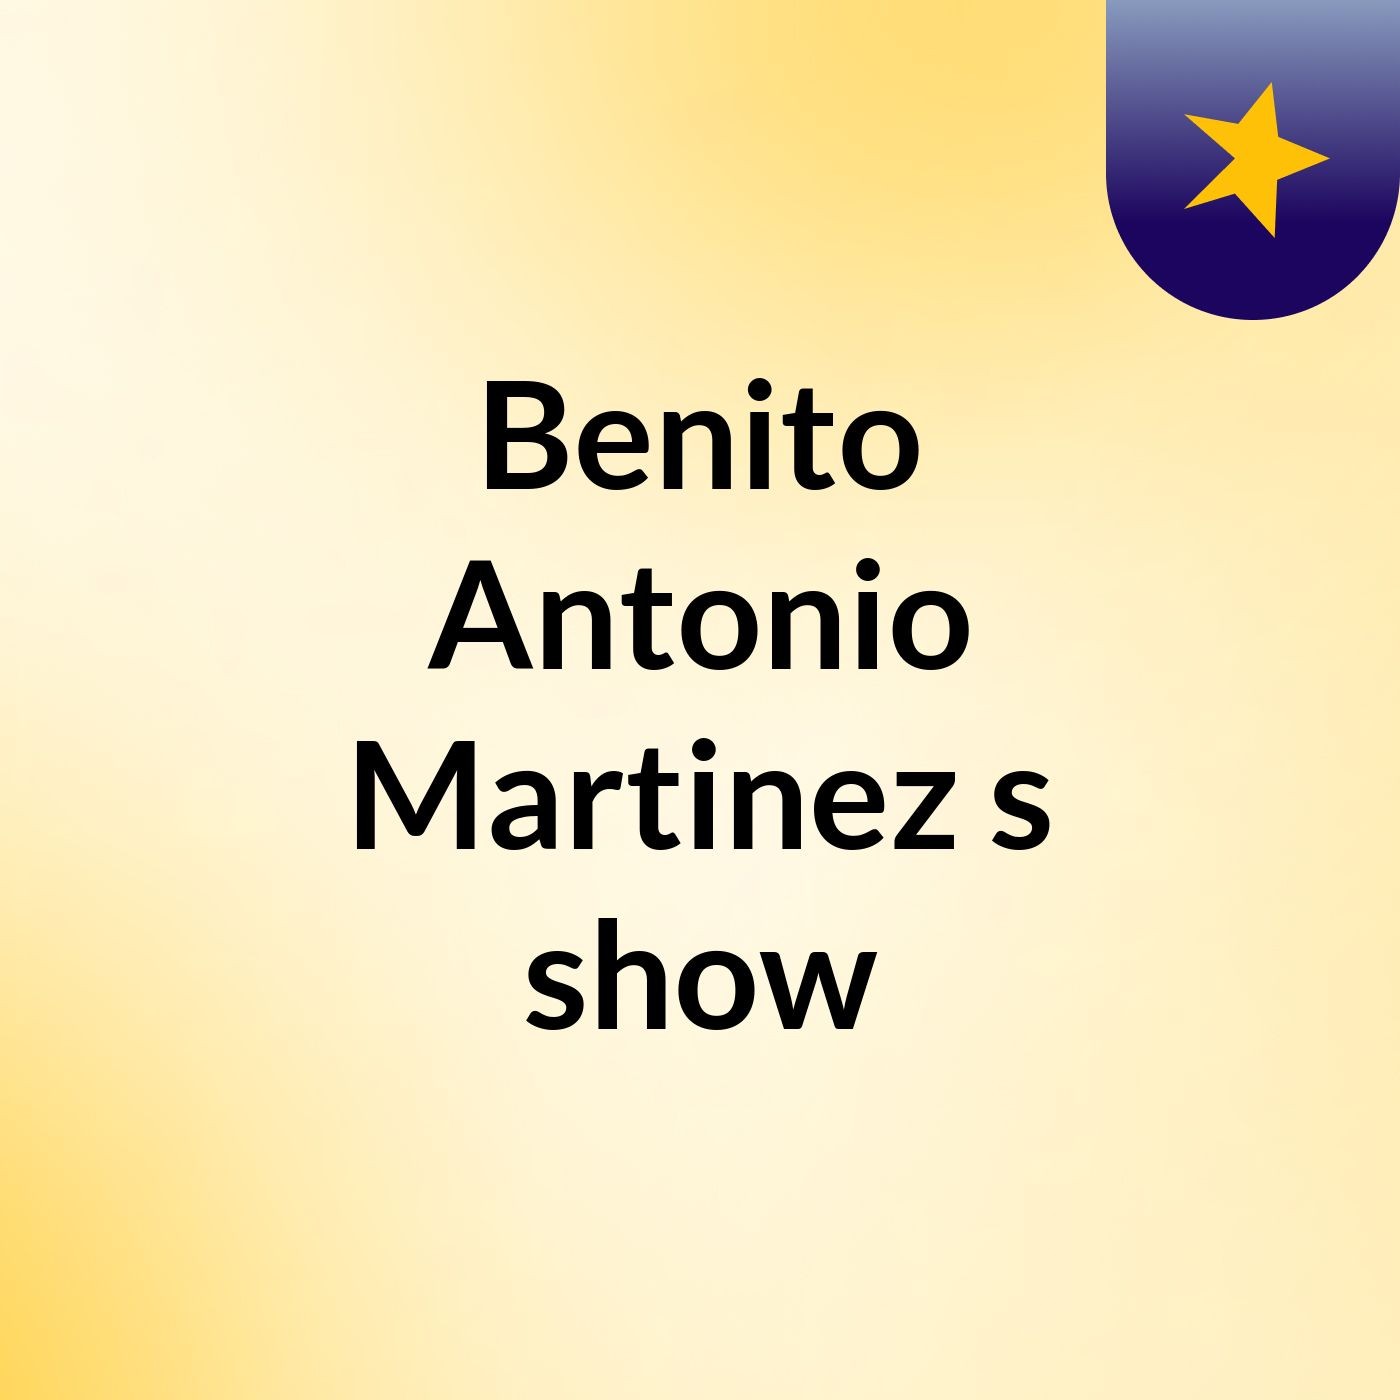 Benito Antonio Martinez's show